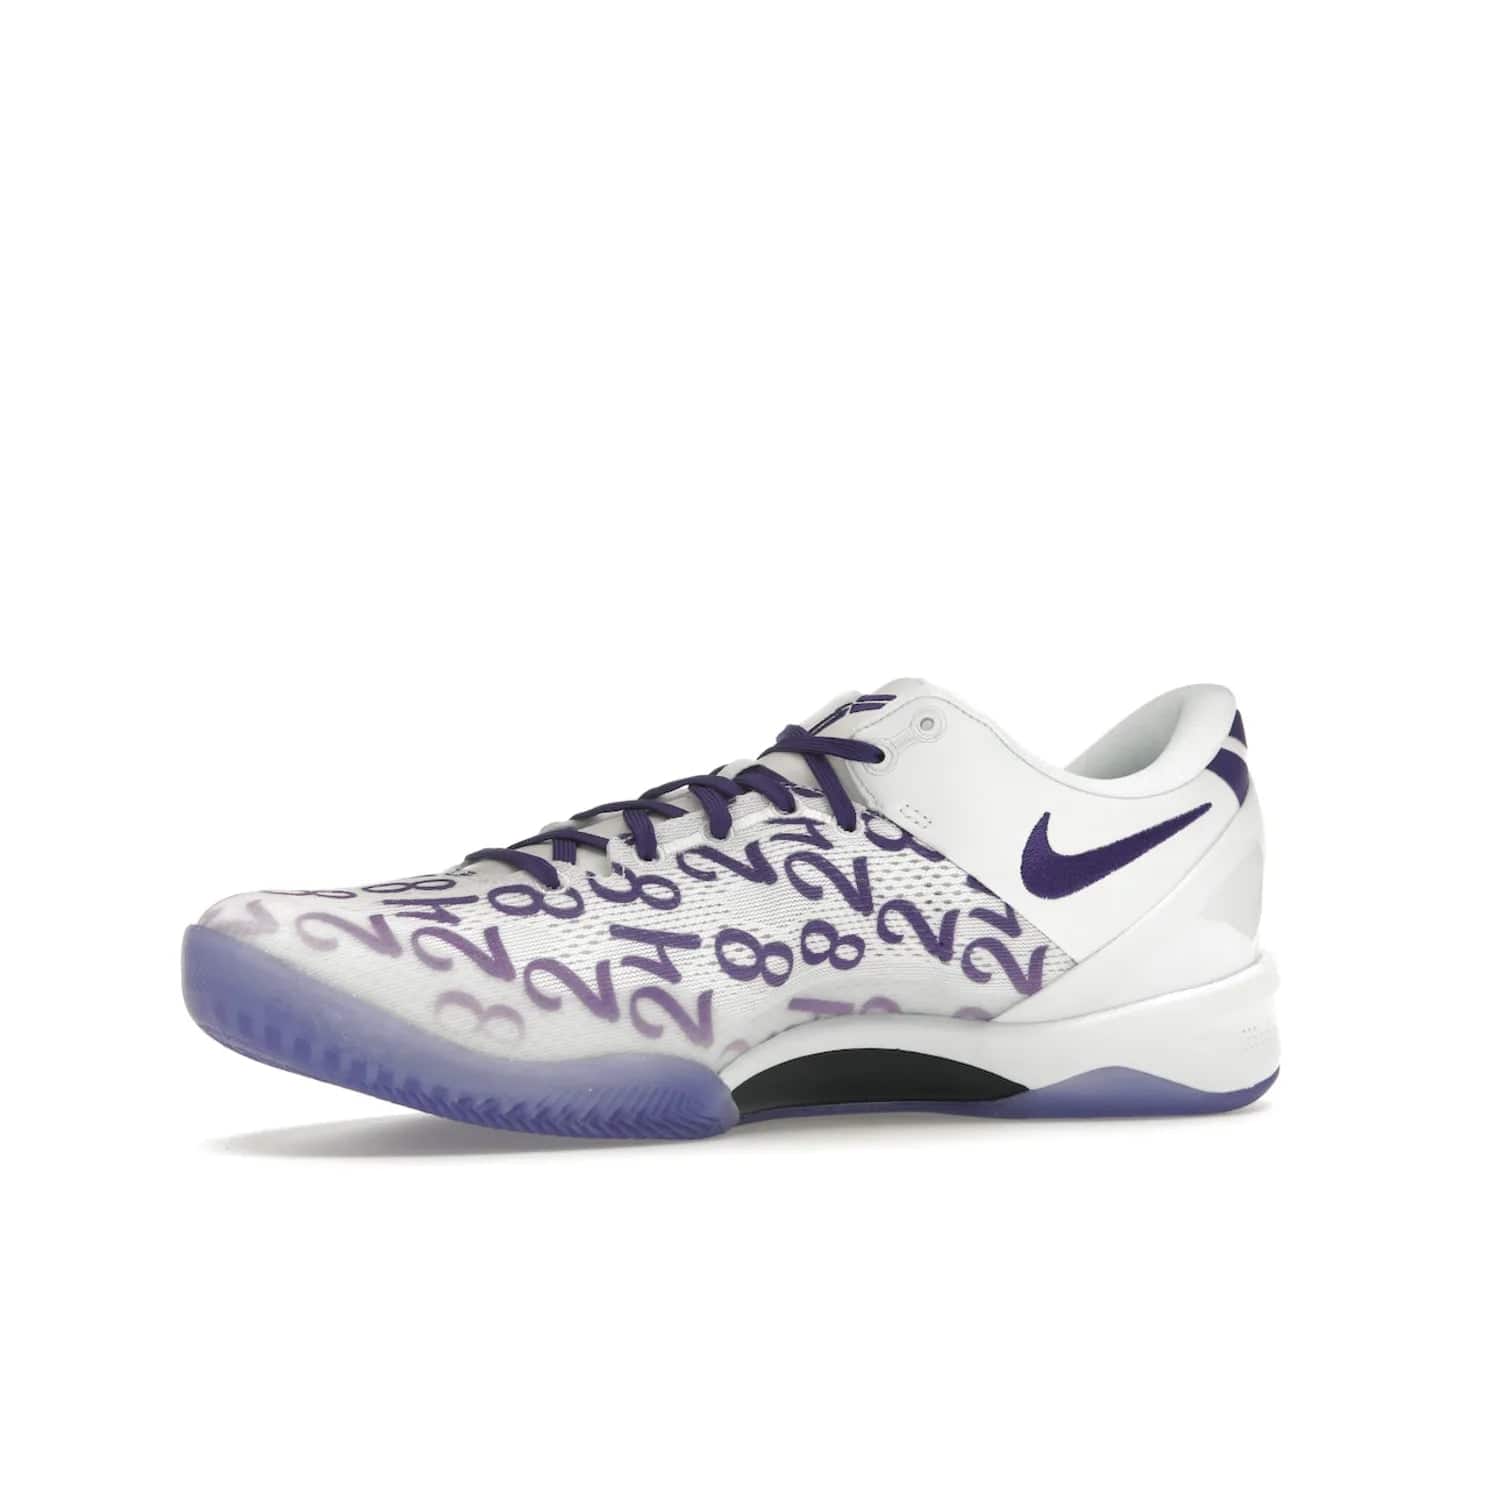 Nike Kobe 8 Protro Court Purple - Image 17 - Only at www.BallersClubKickz.com - 